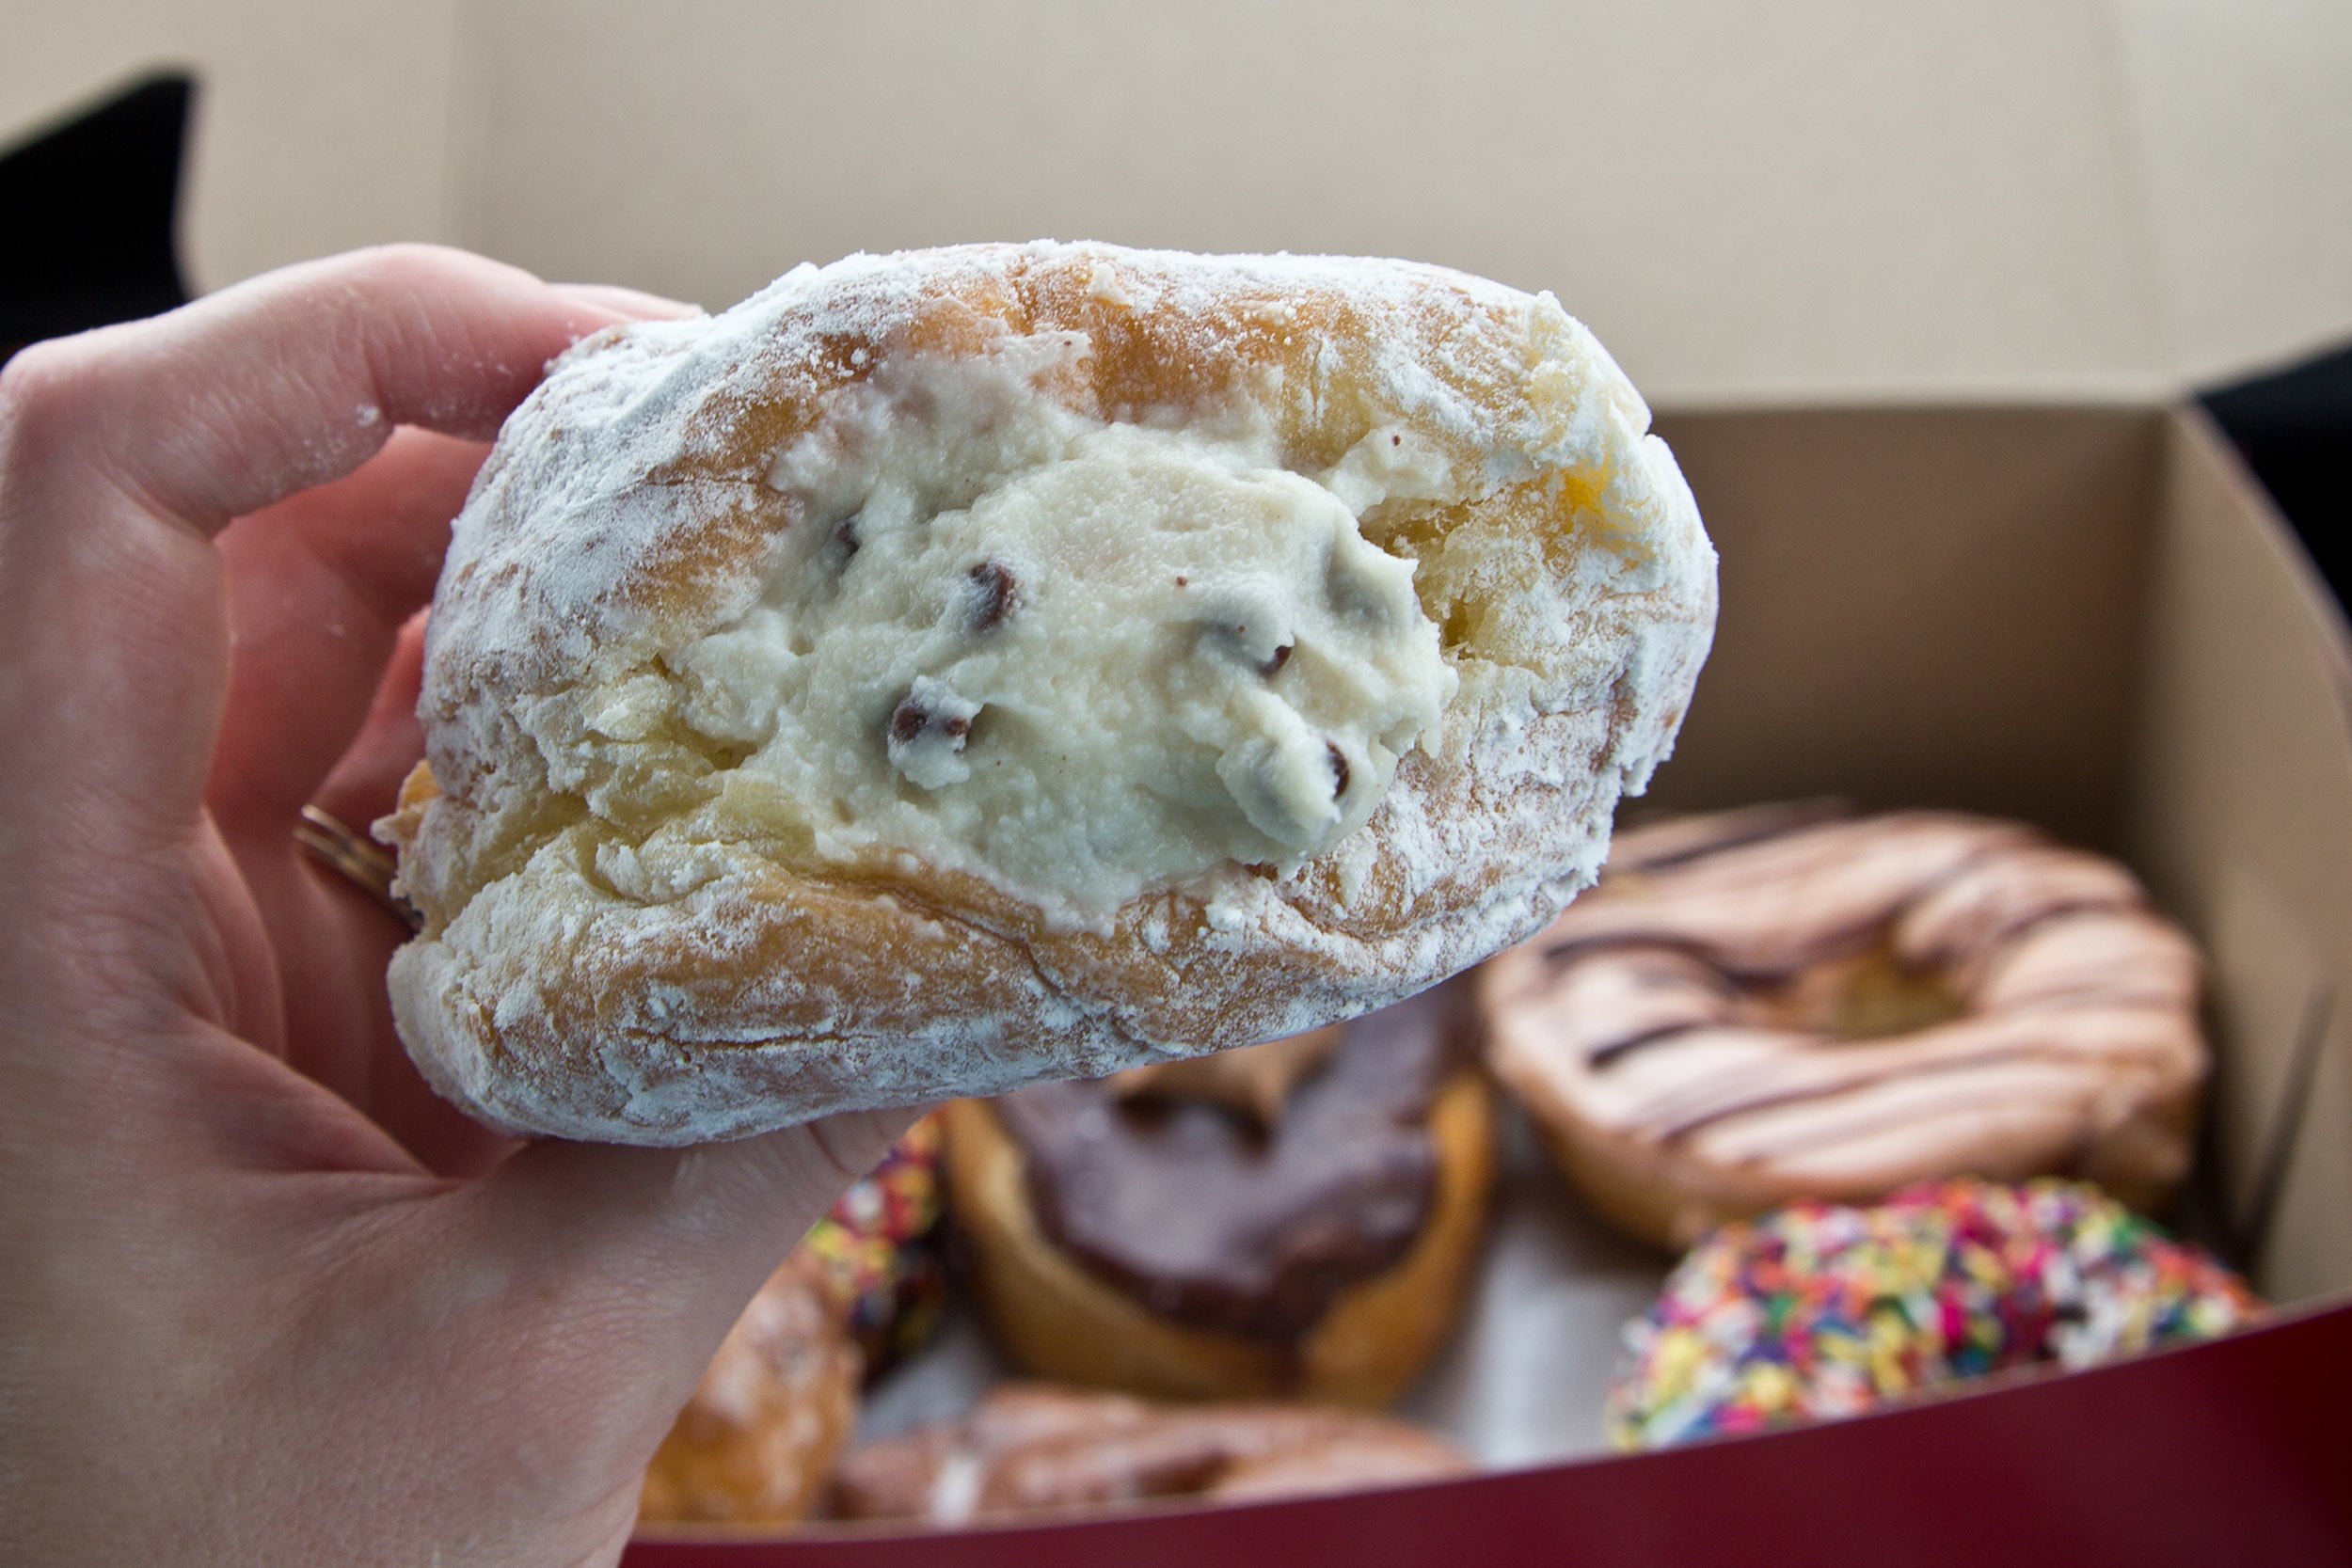 Paulas-cannoli-filled-donut